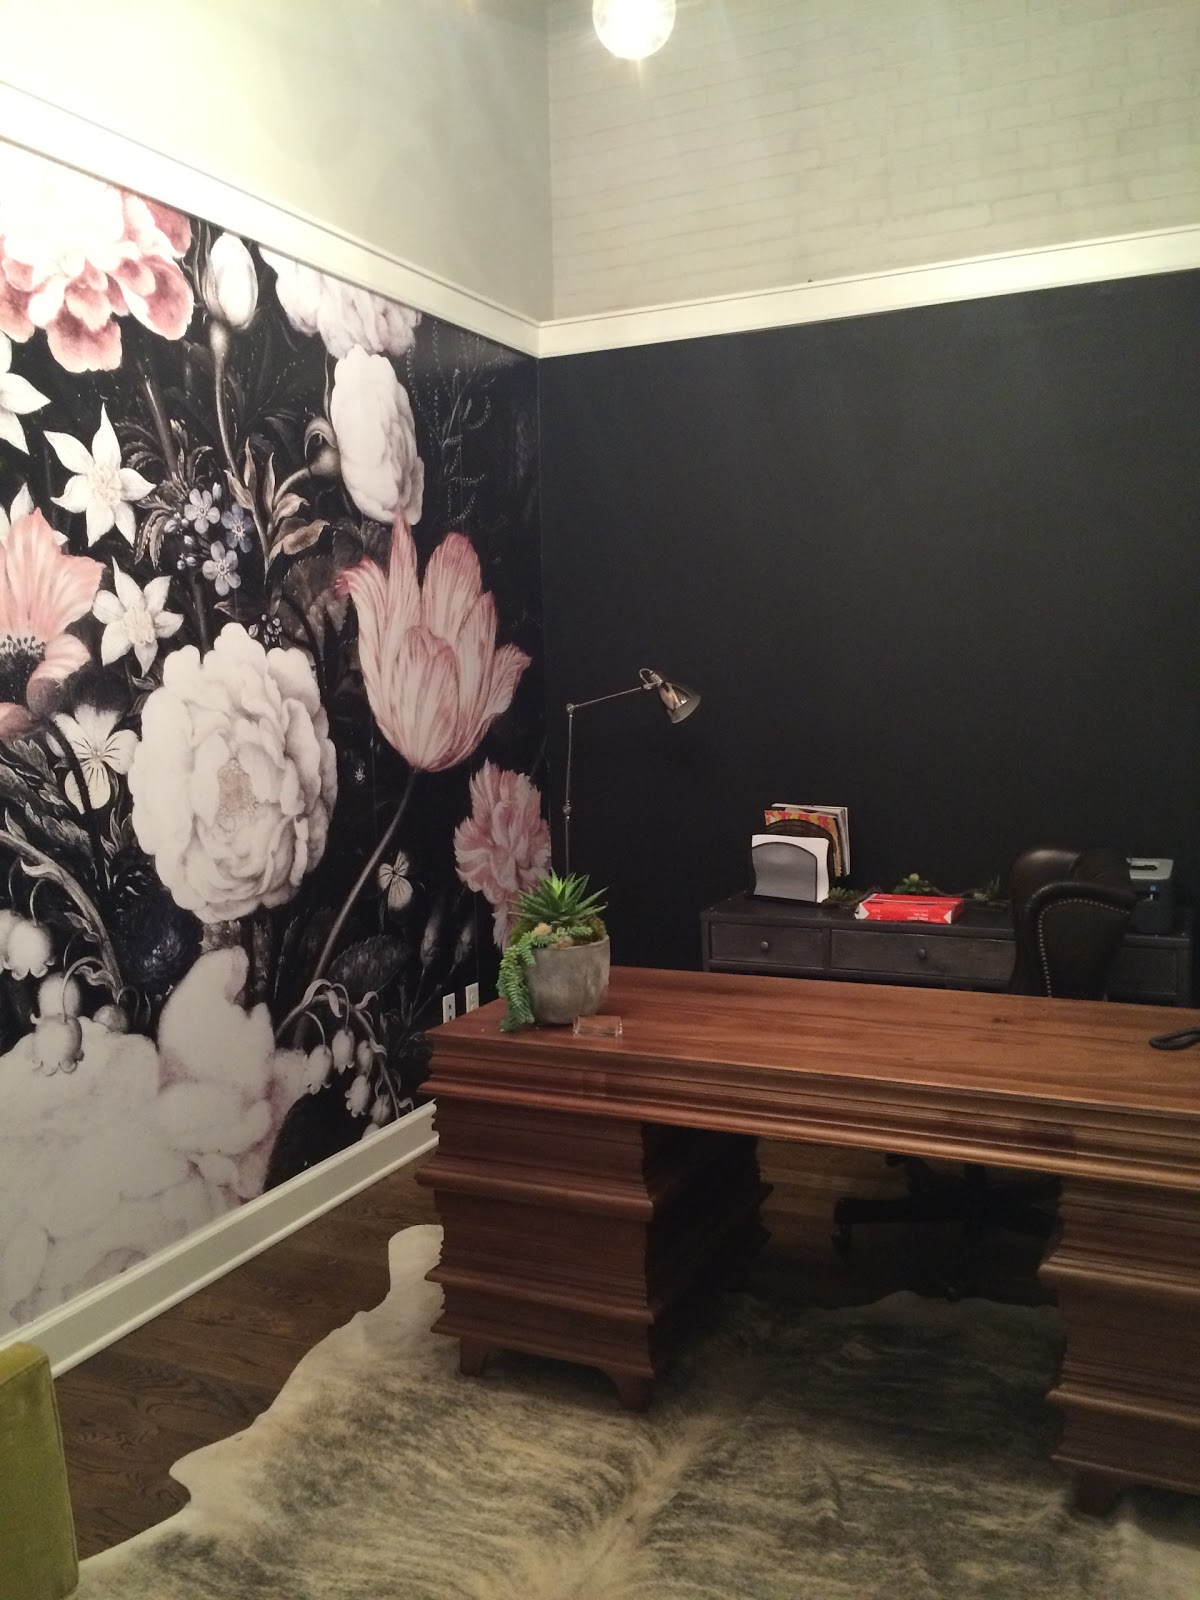 murale carta da parati floreale,interior design,camera,proprietà,mobilia,parete